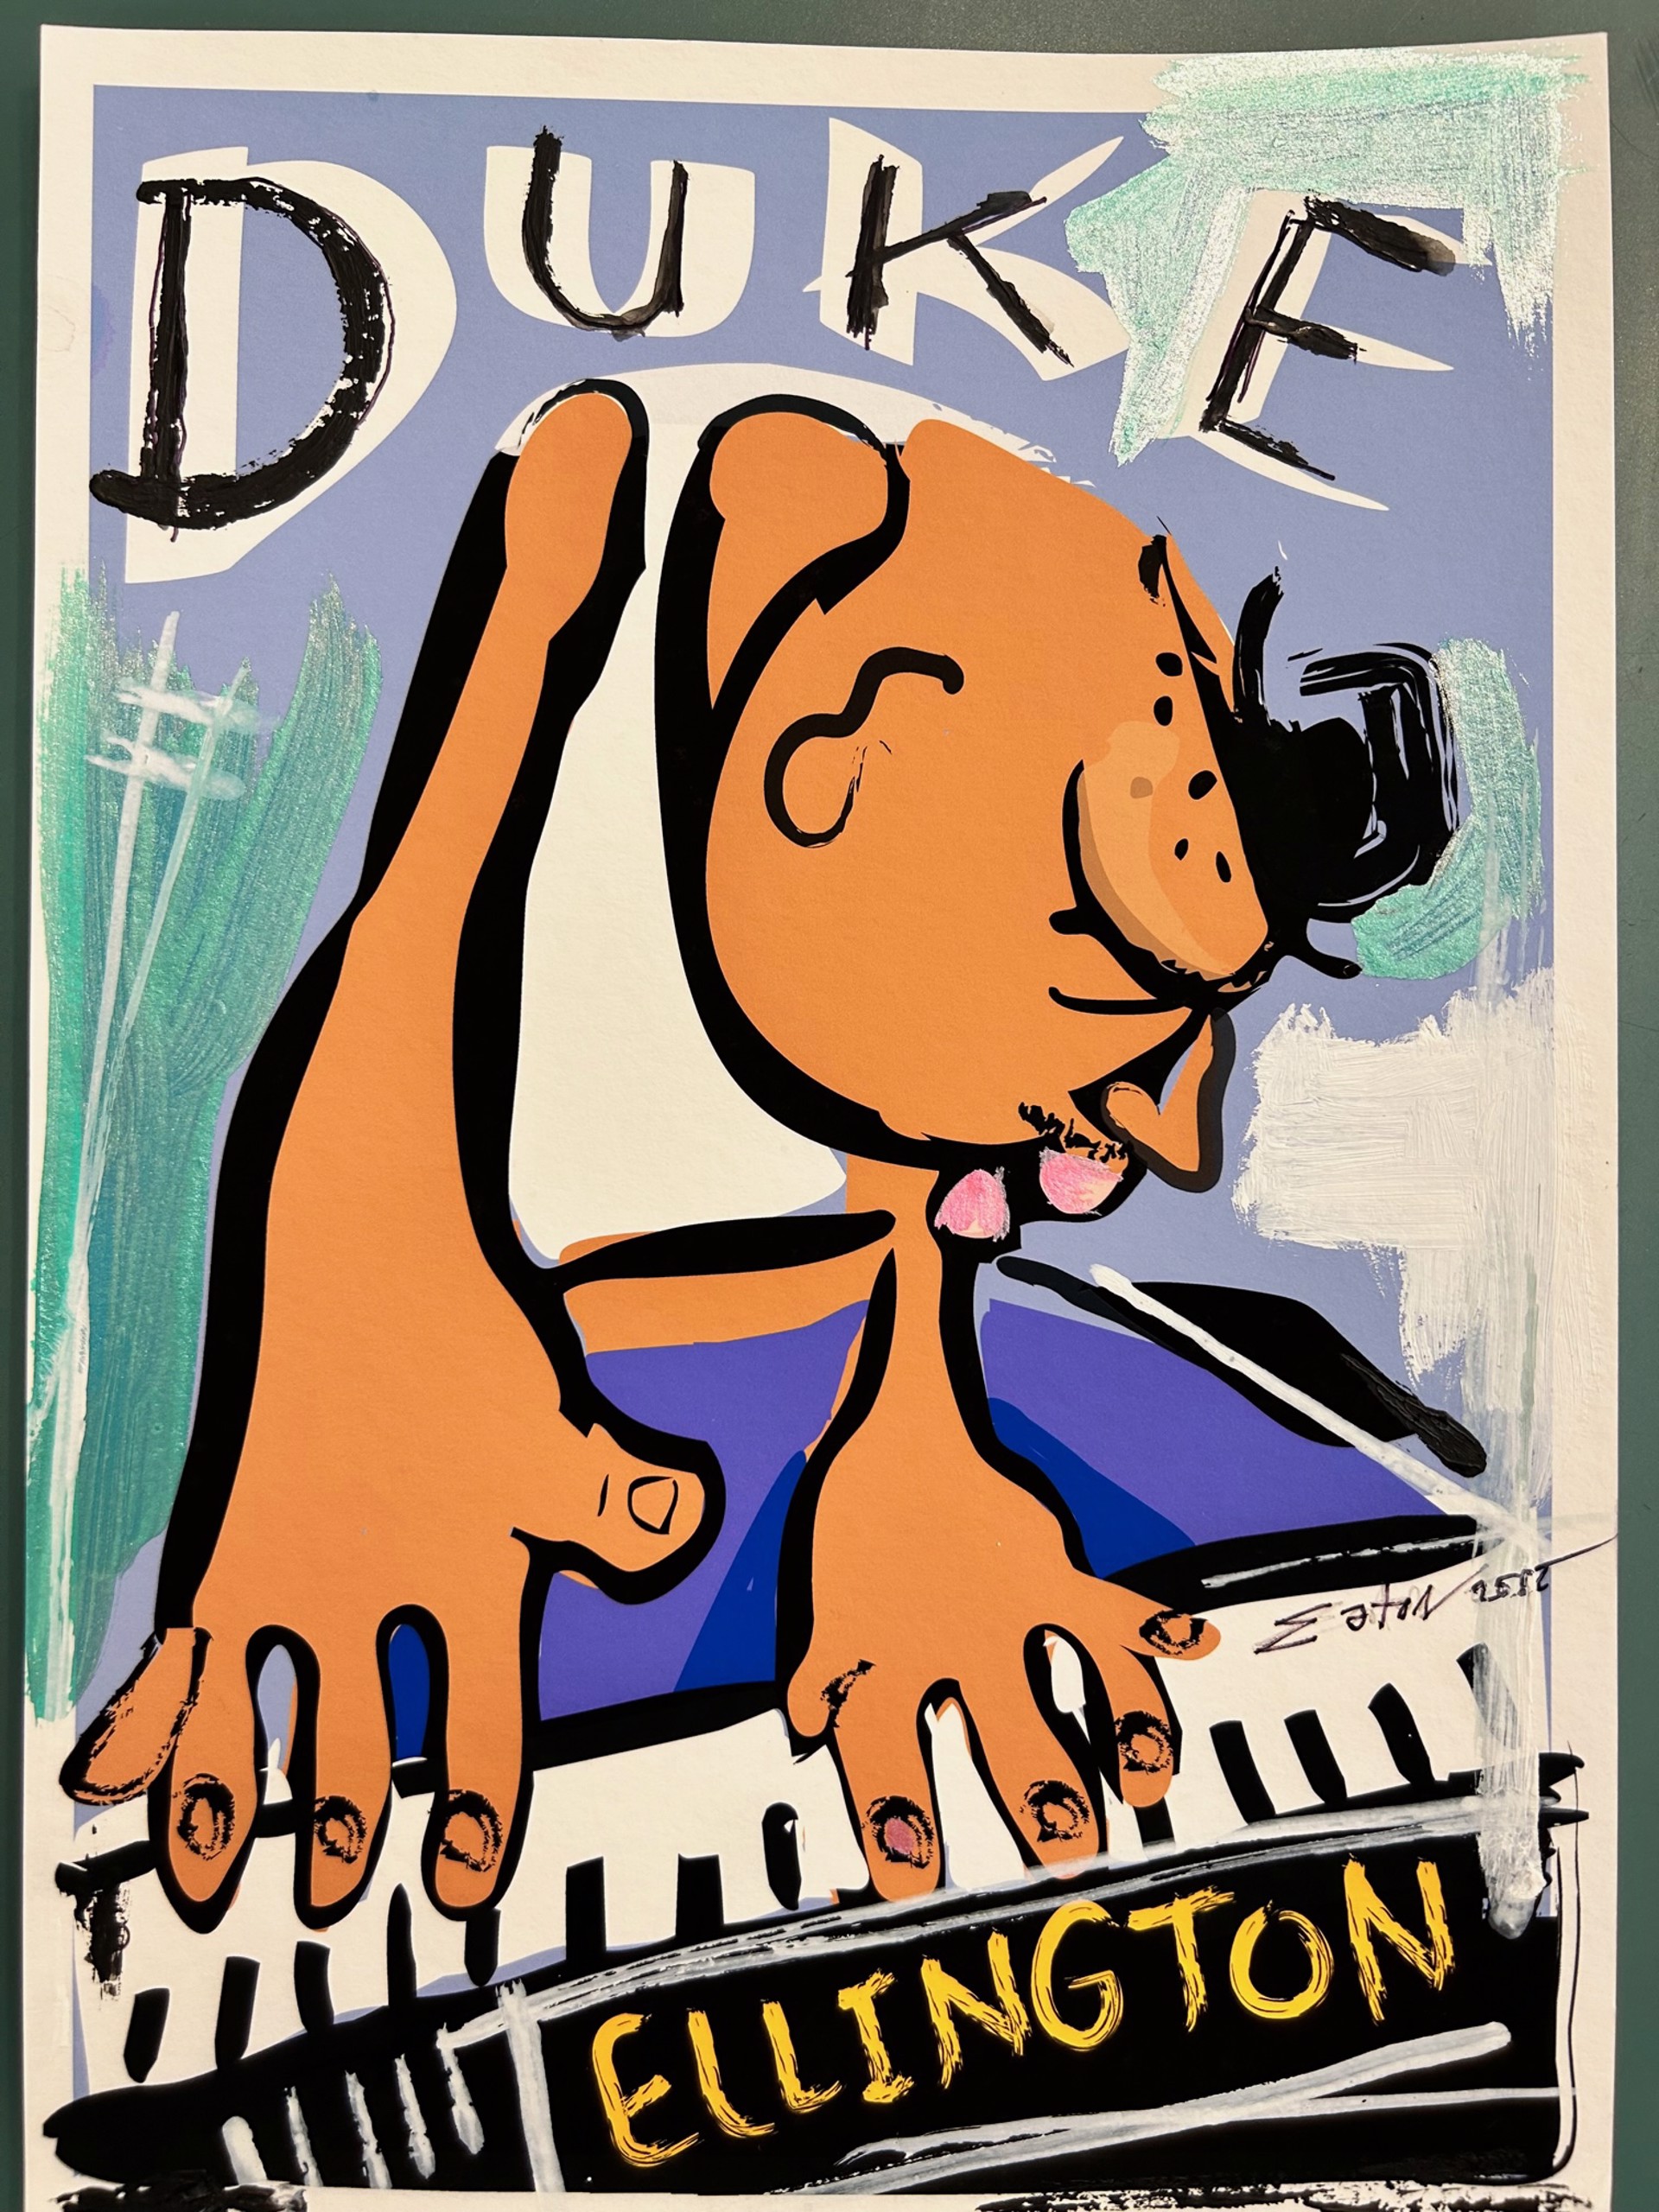 "Duke Ellington" by Easton Davy